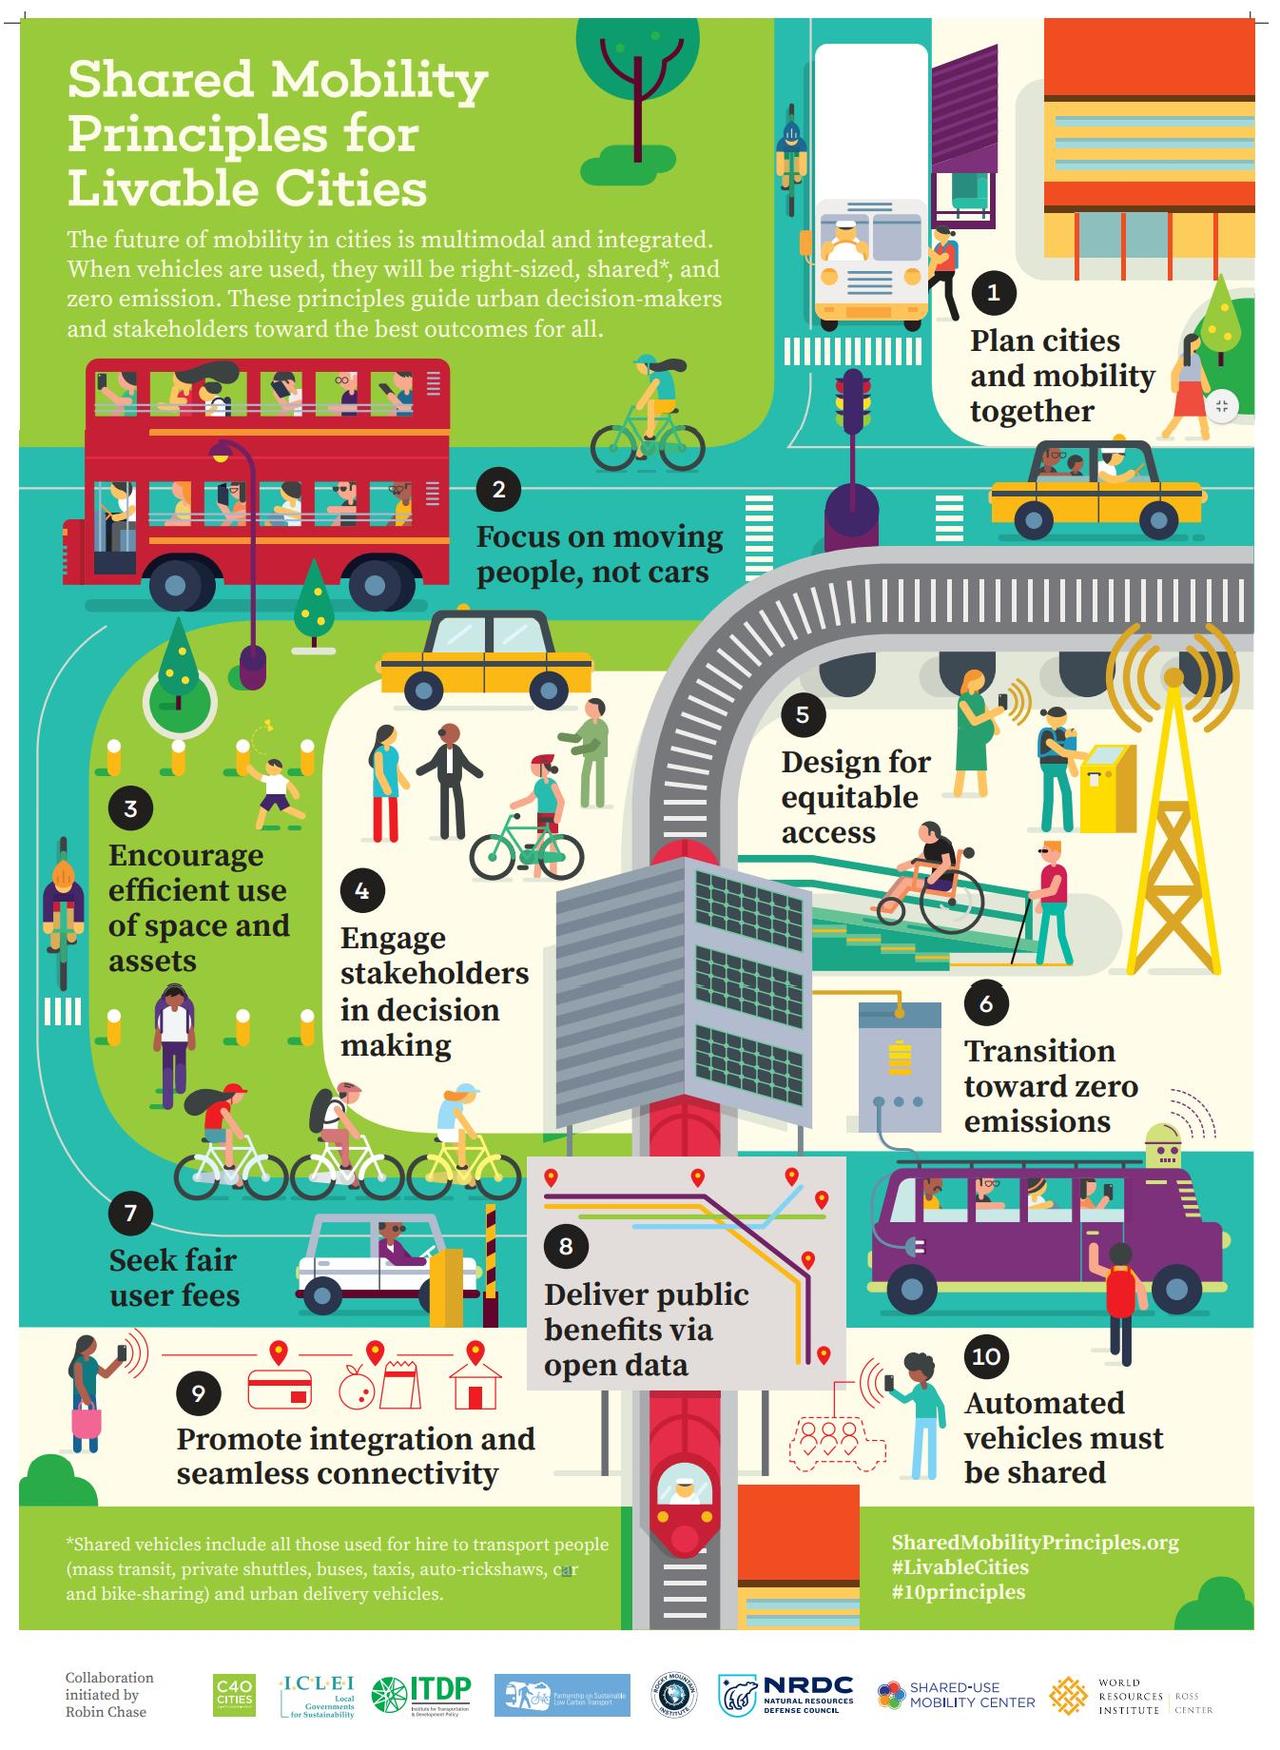 Shared #Mobility Principles For Livable Cities. By https://www.sharedmobilityprinciples.org/ #SmartCity #innovation #Futureofwork #Tech #AutonomousVehicles #IoT #Opendata #Smartcities #Bigdata #EmergingTechnologies  Cc: @mvollmer1 @FrRonconi @alvinfoo @chboursin @DrJDrooghaag @ArkangelScrap https://t.co/dlbS10eWnk